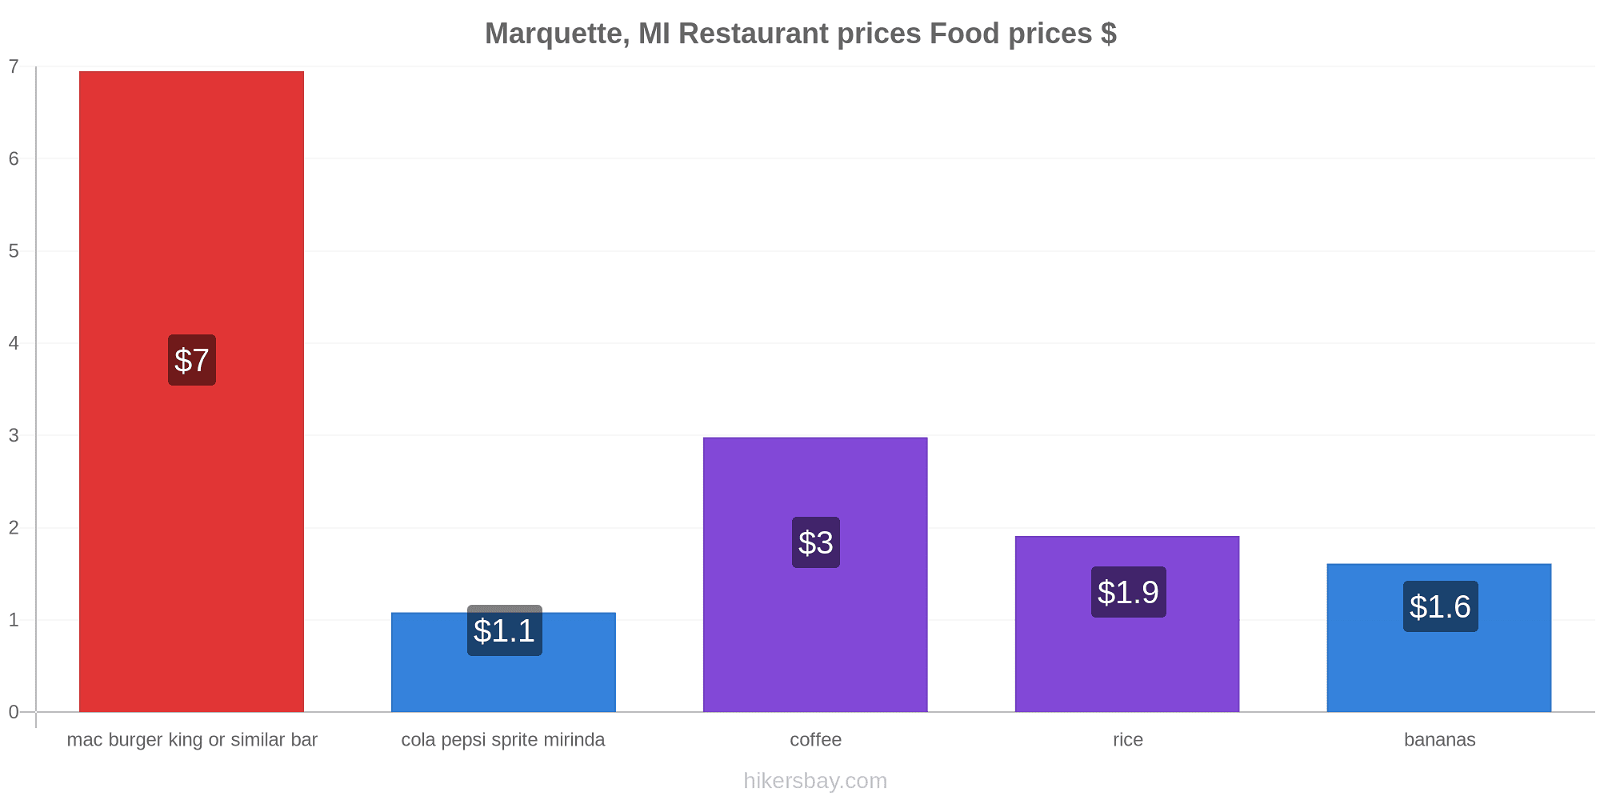 Marquette, MI price changes hikersbay.com